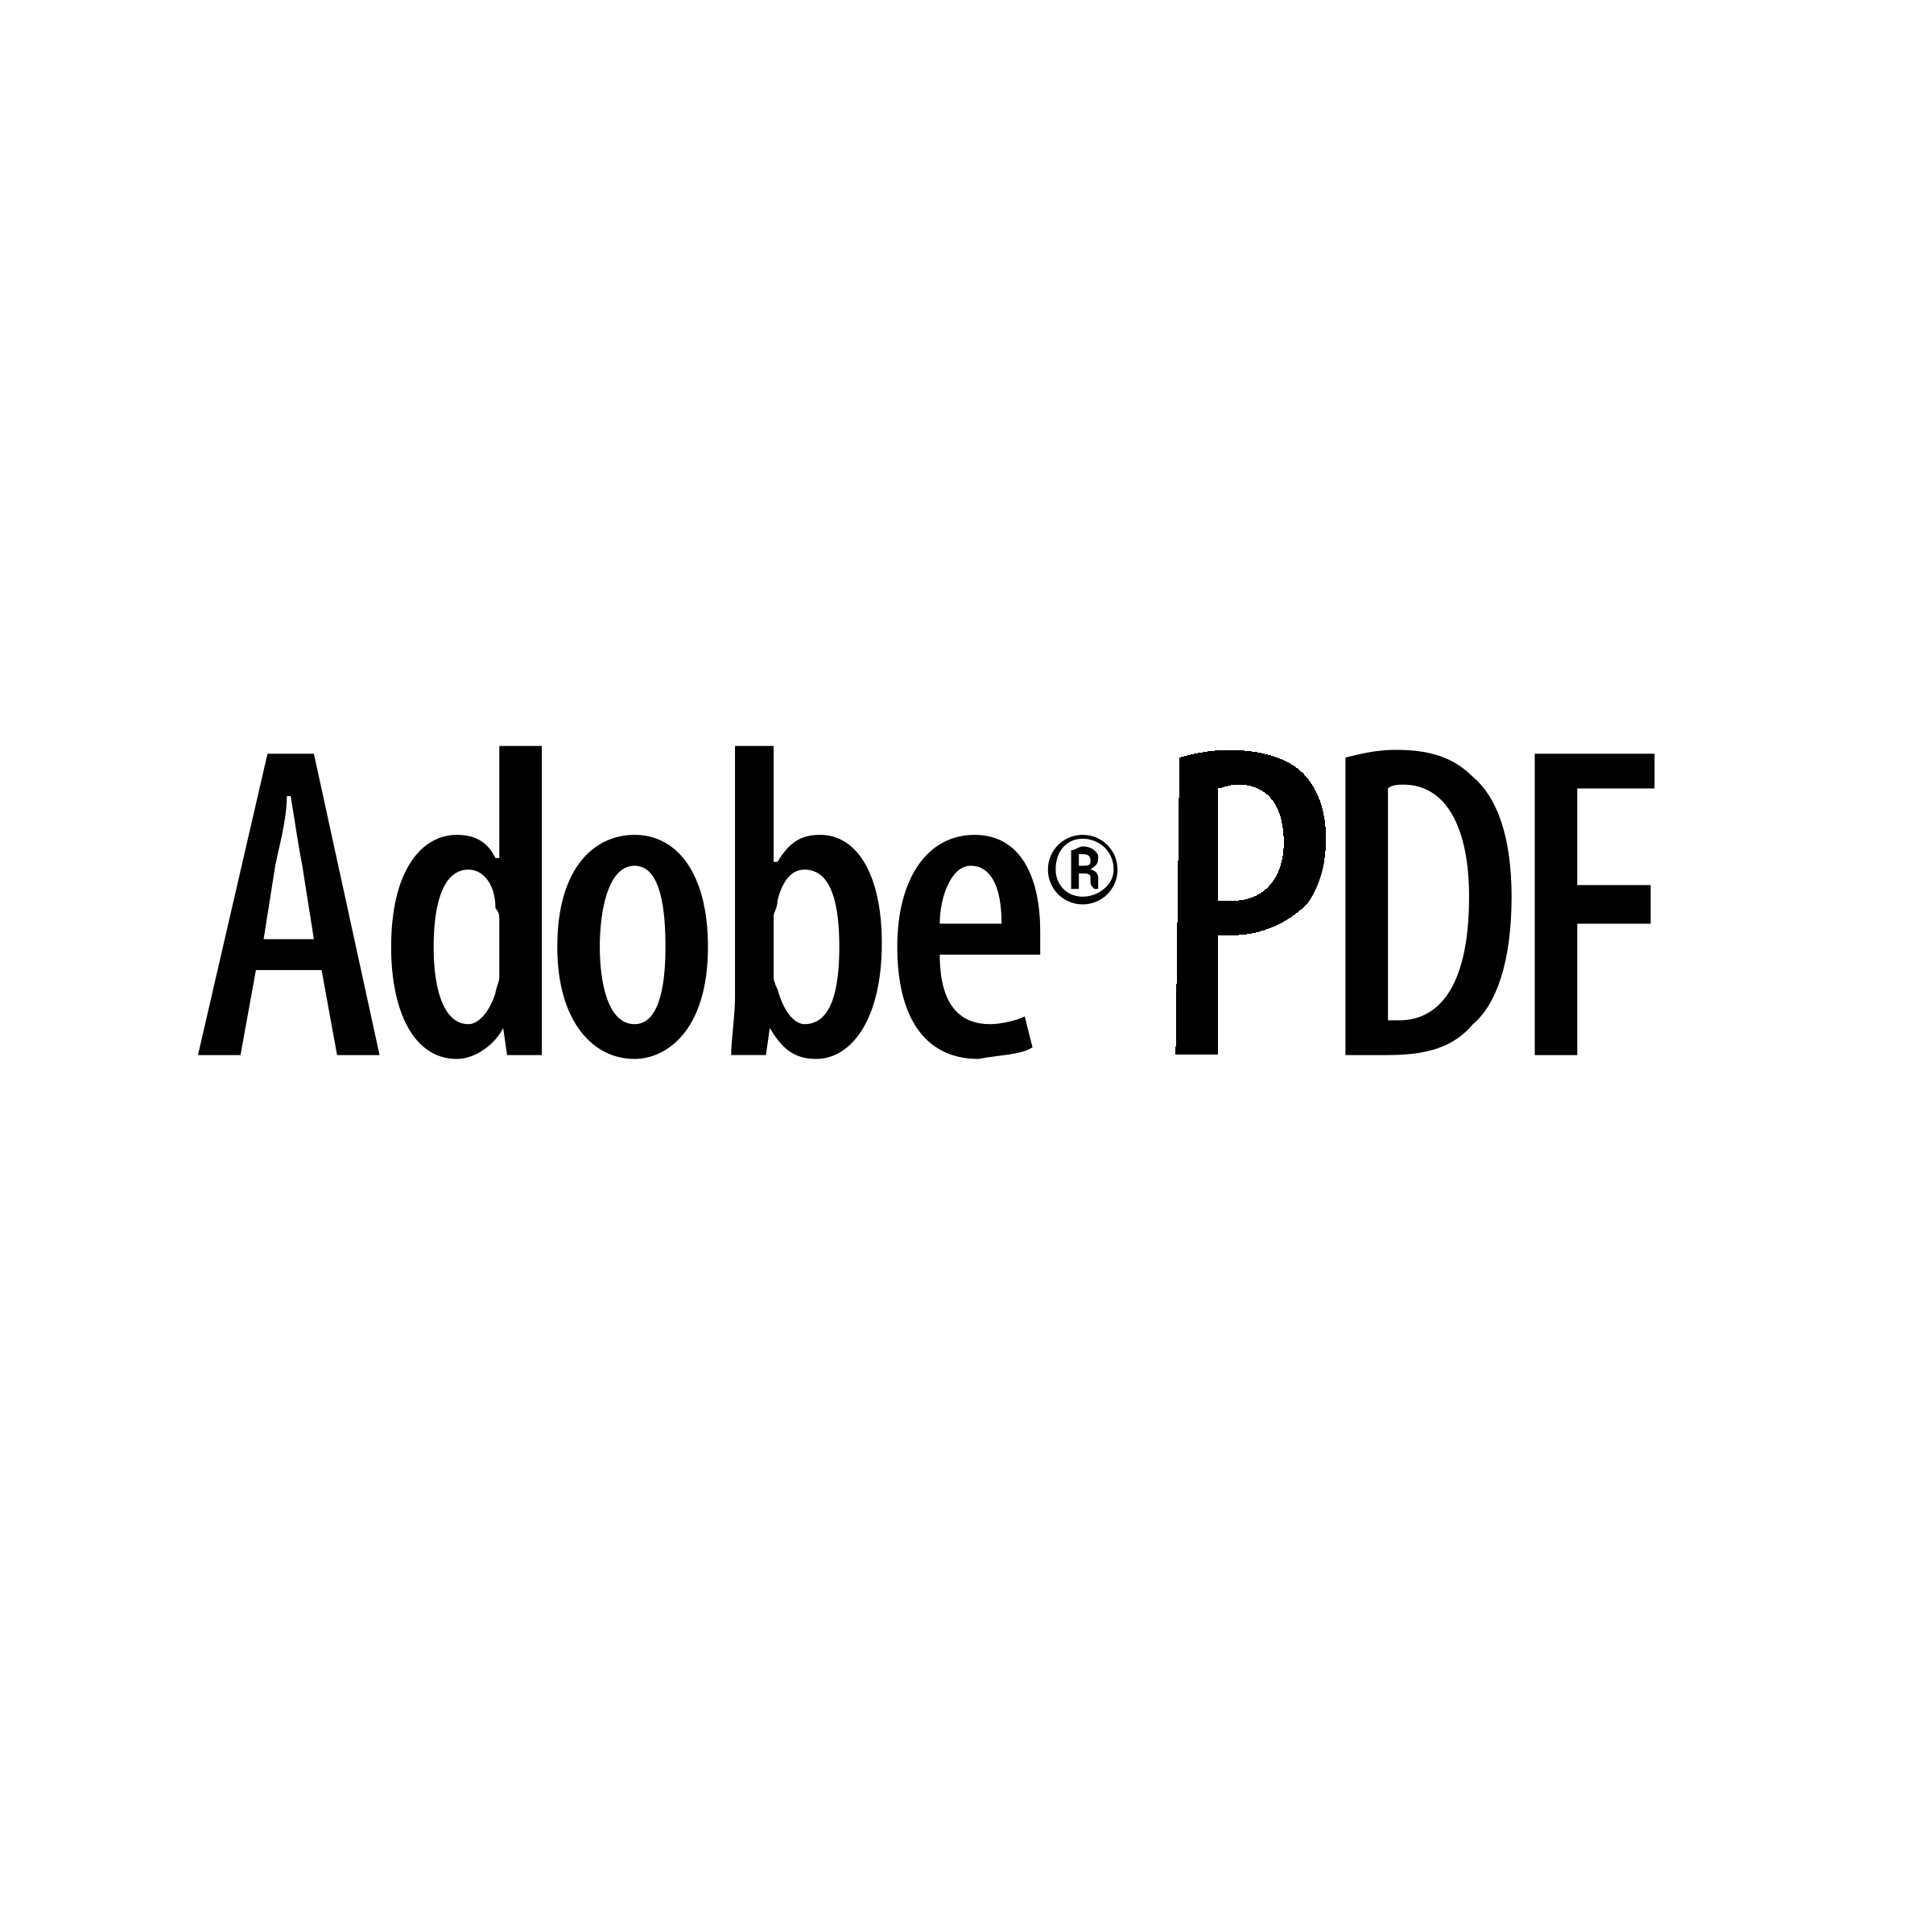 Adobe PDF Logo - Adobe PDF Logo PNG Transparent & SVG Vector